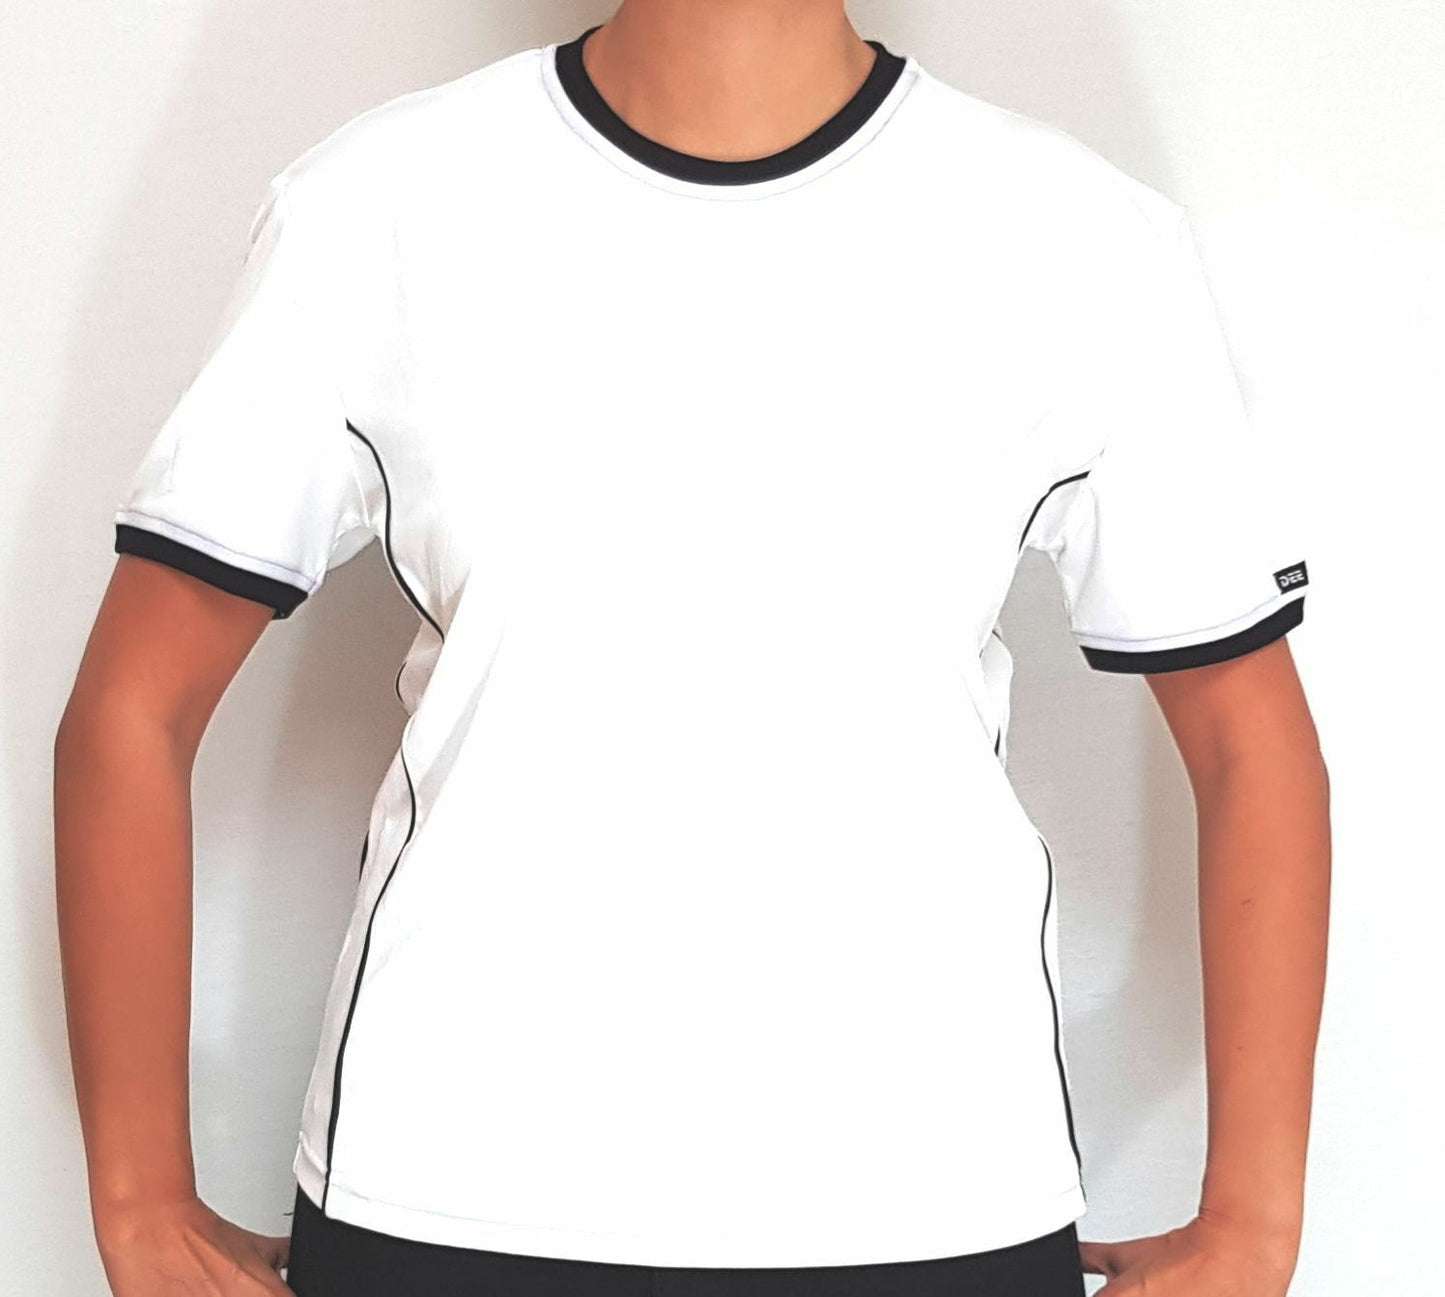 DEE - Damen Funktions Shirt - Microfaser pflegeleicht - 100% seidiges Polyester